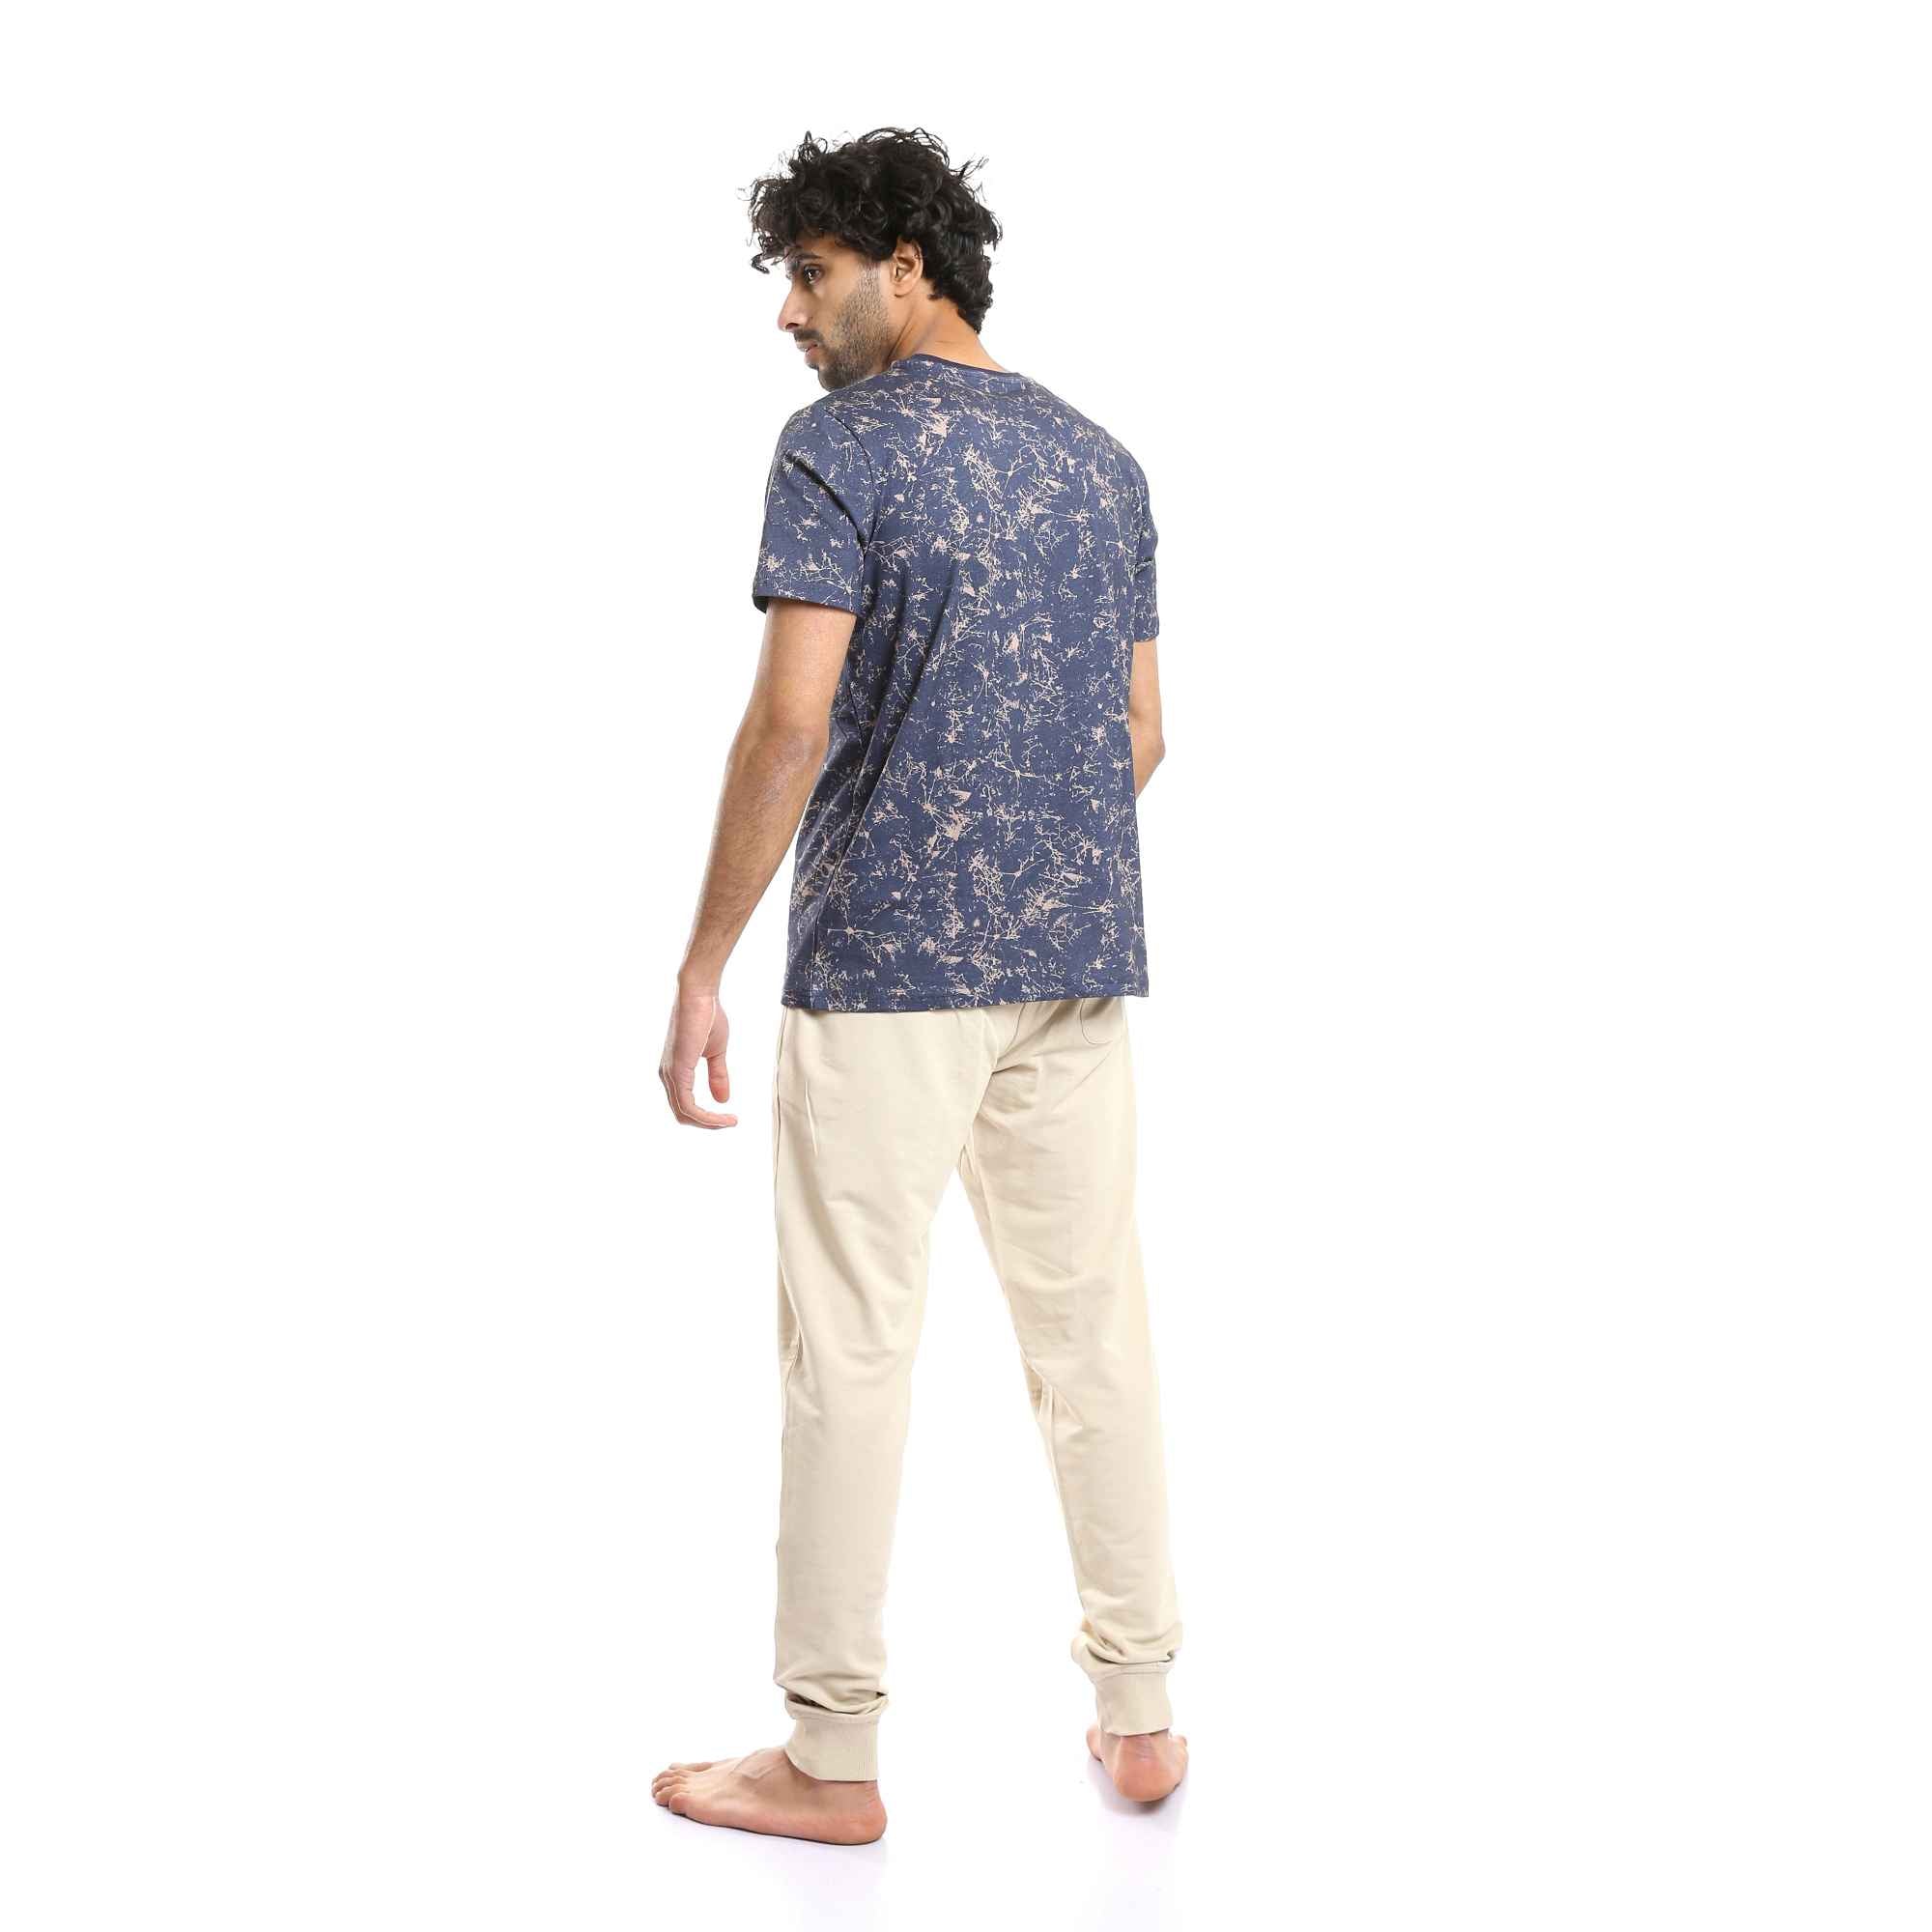 Patterned Round Neck Tee & Pants Pajama Set - Navy Blue & Beige